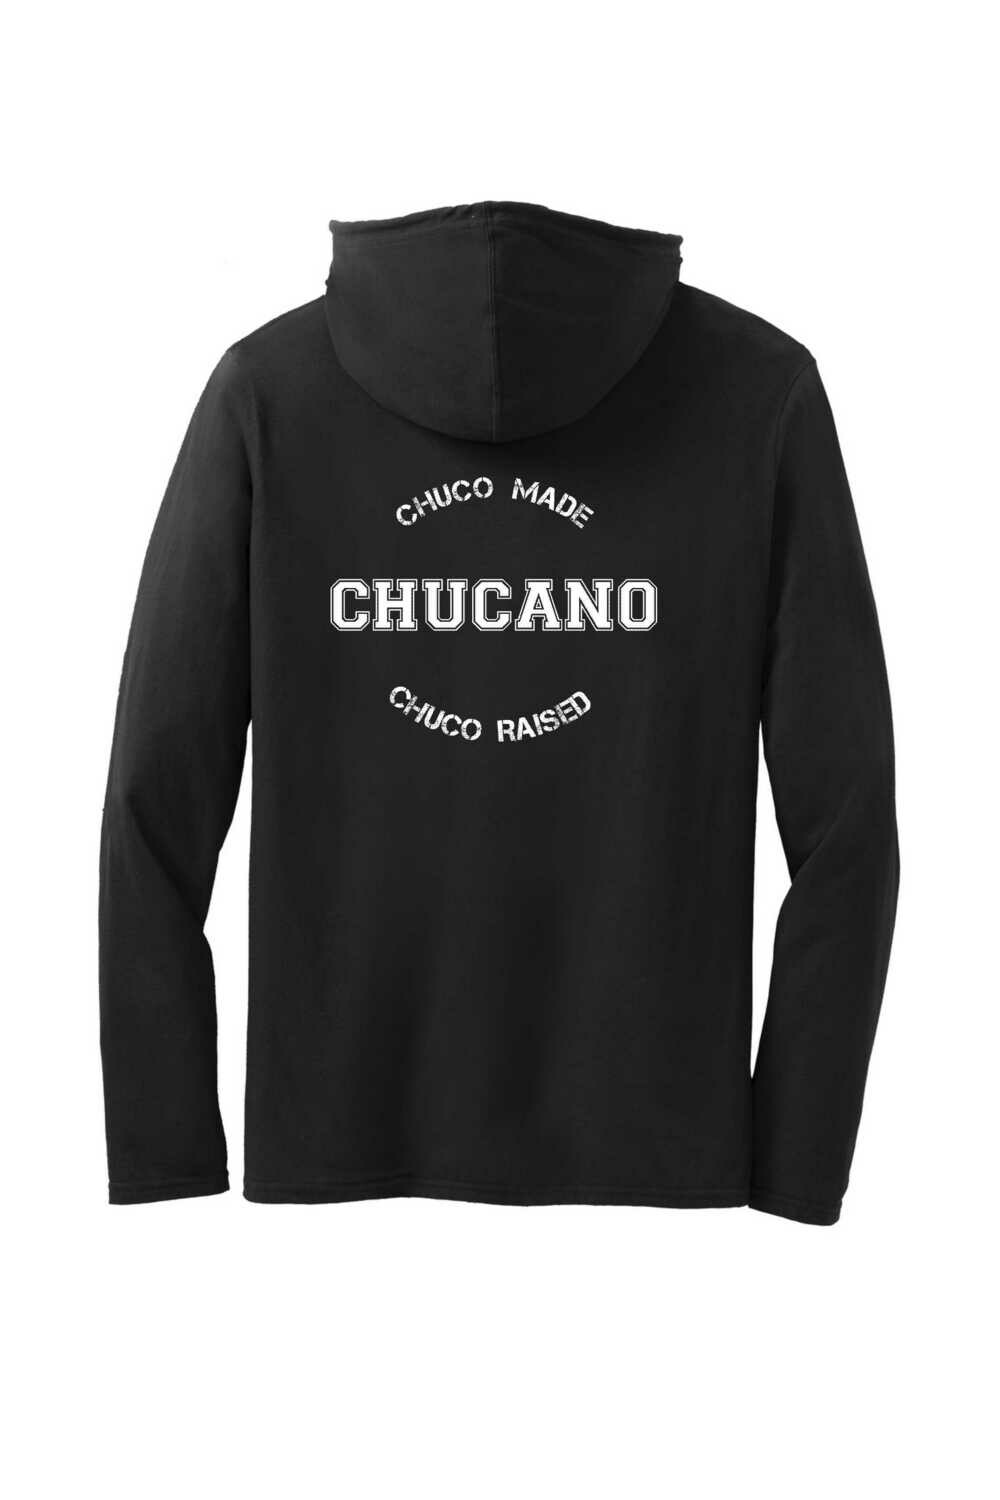 Chucano Style Light Hoodie